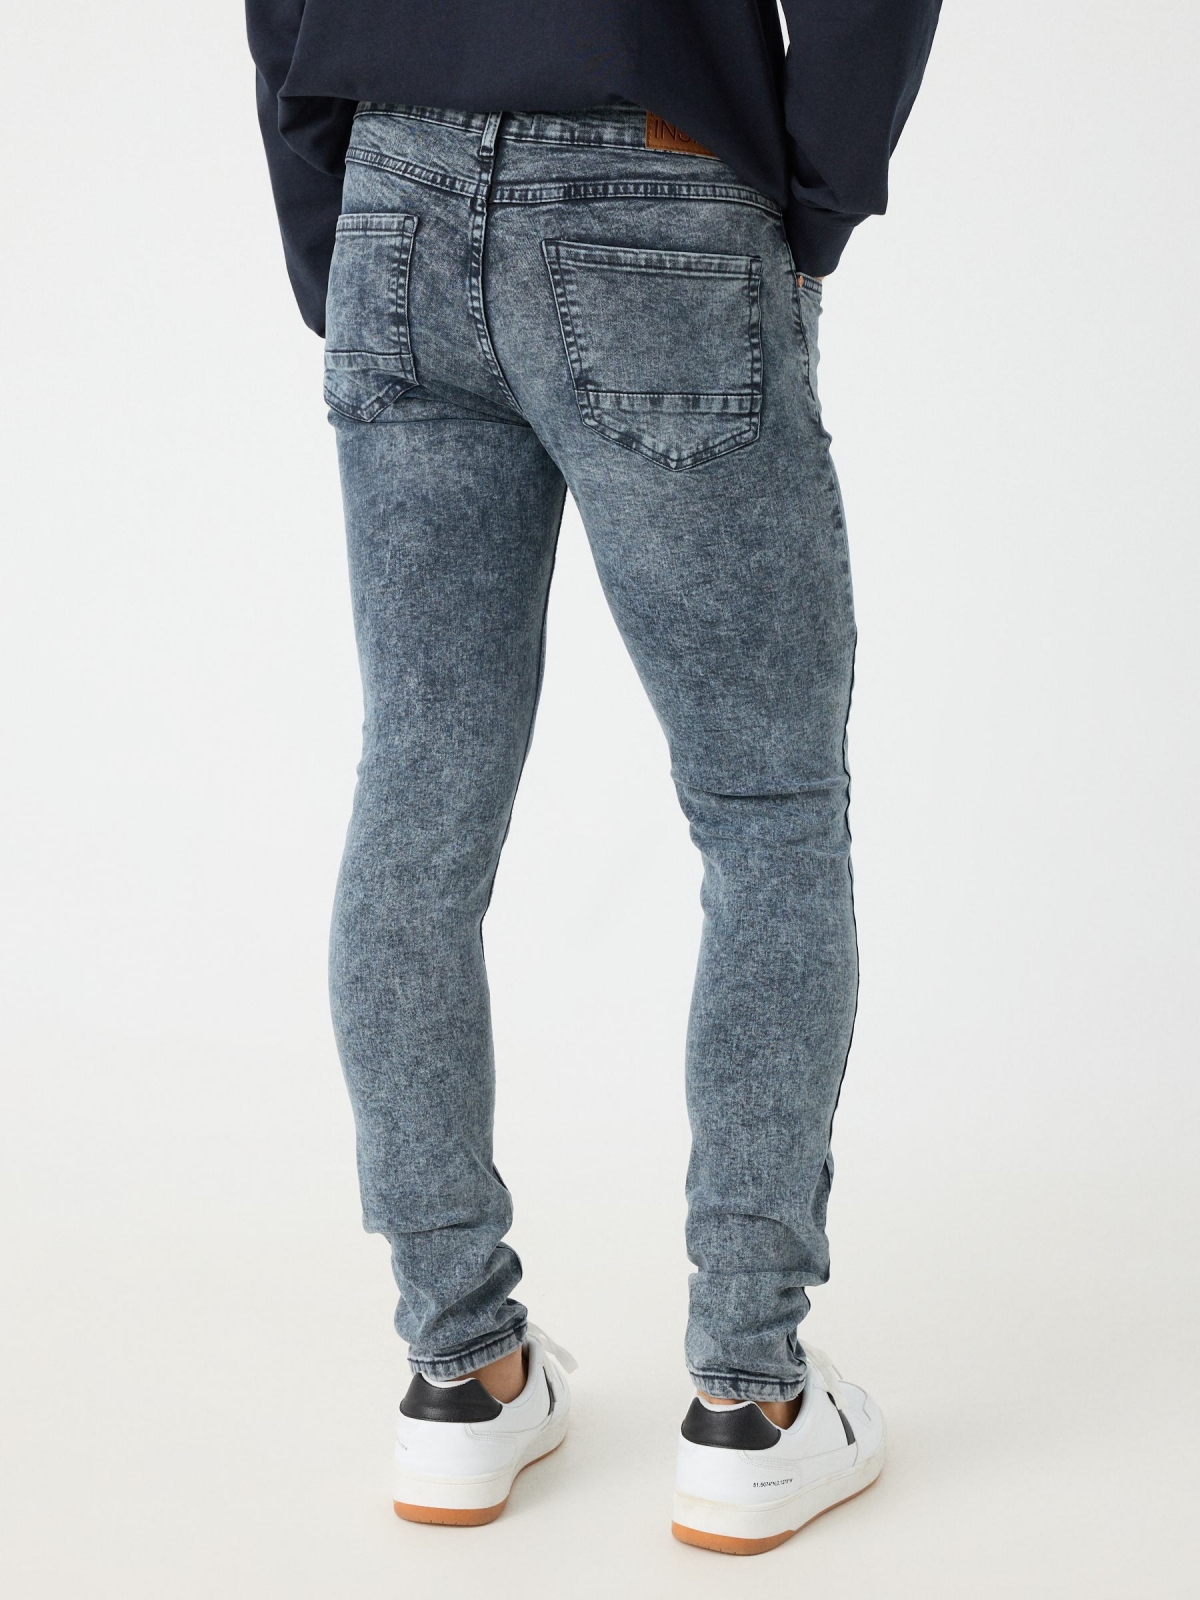 Super slim jeans blue middle back view